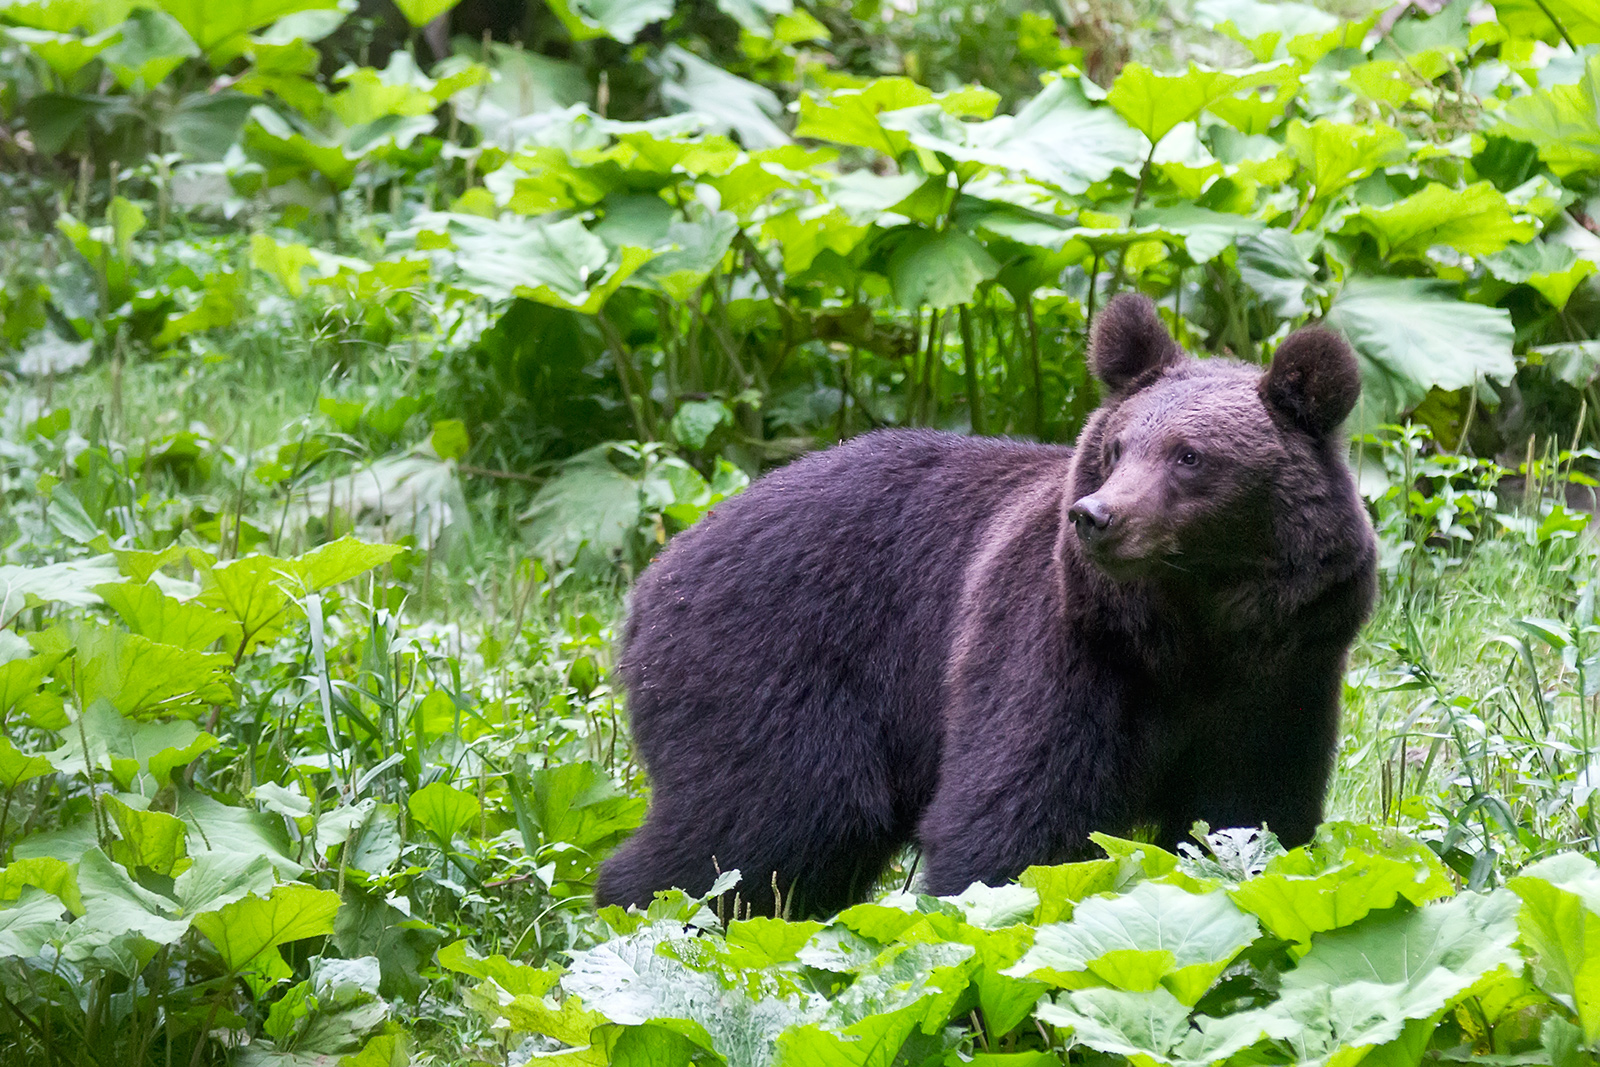 The big Carpathian Bear at the clearing near the bear hide